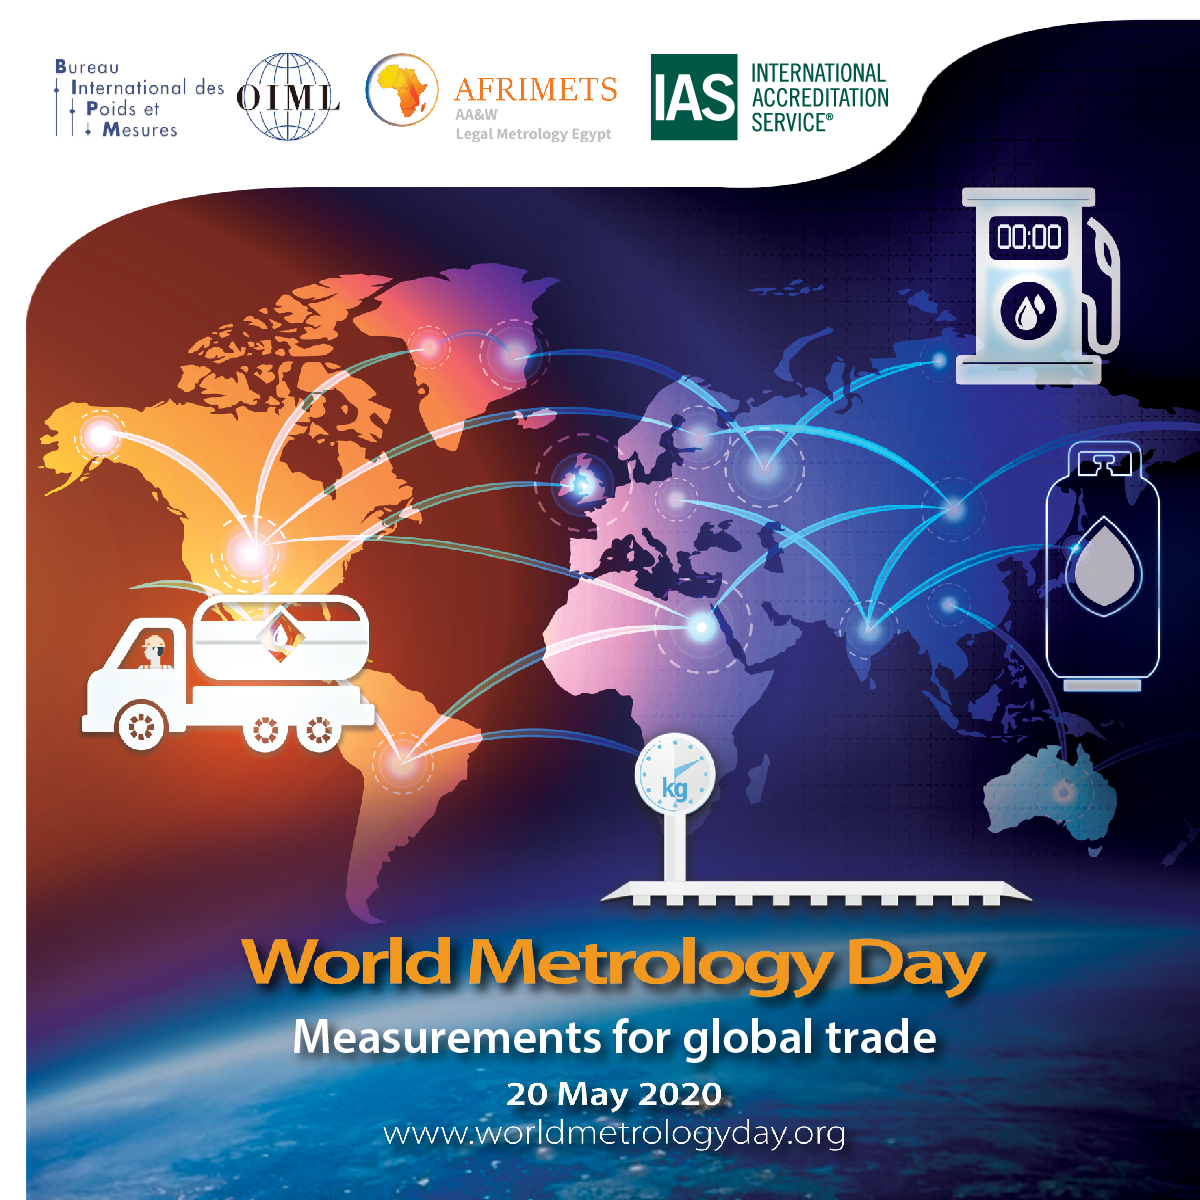 World Metrology Day 2020 International Accreditation Service, Inc.